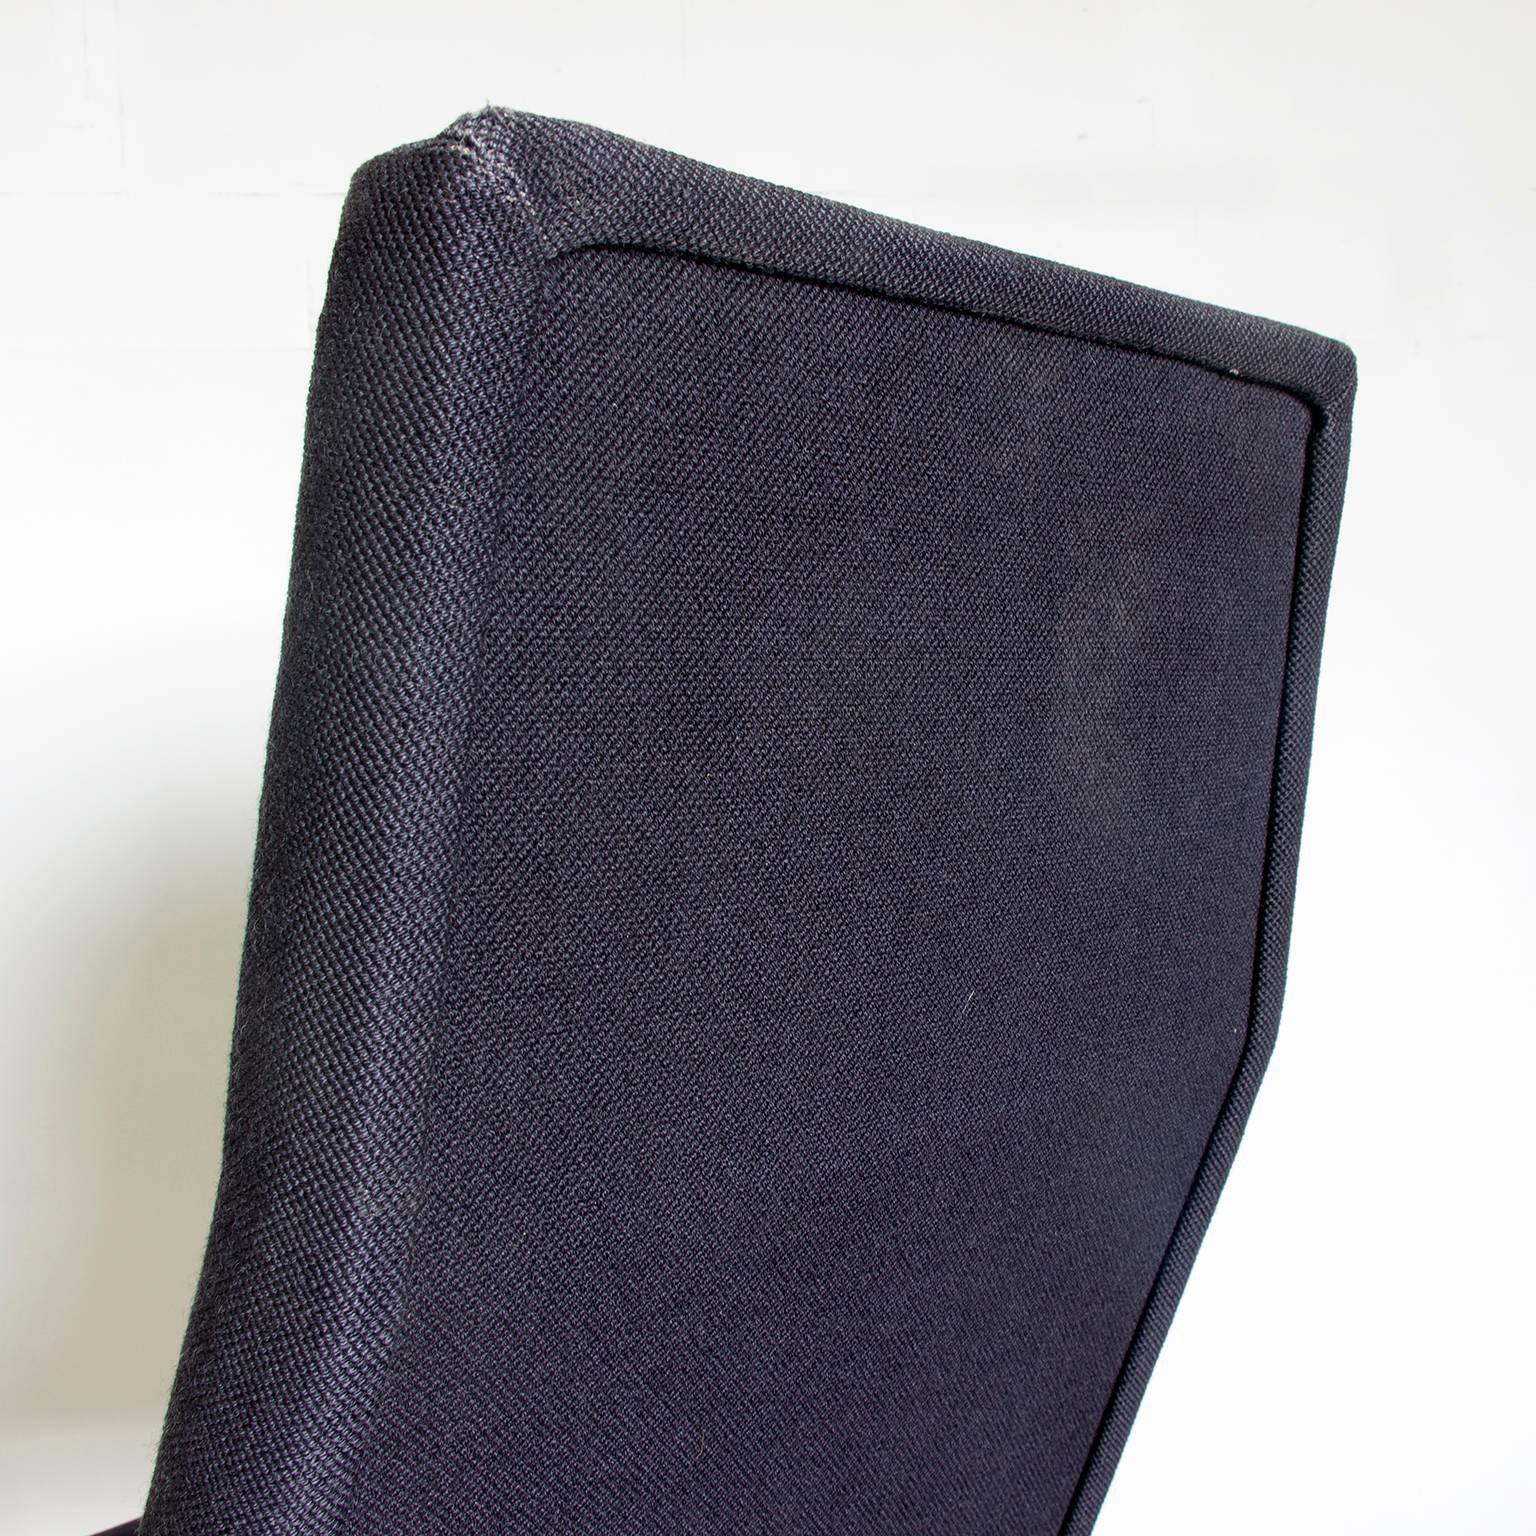 1959, Cordemeyer for Gispen, Easy Chair 1410, Original Dark Blue/Black Fabric In Good Condition For Sale In Amsterdam IJMuiden, NL